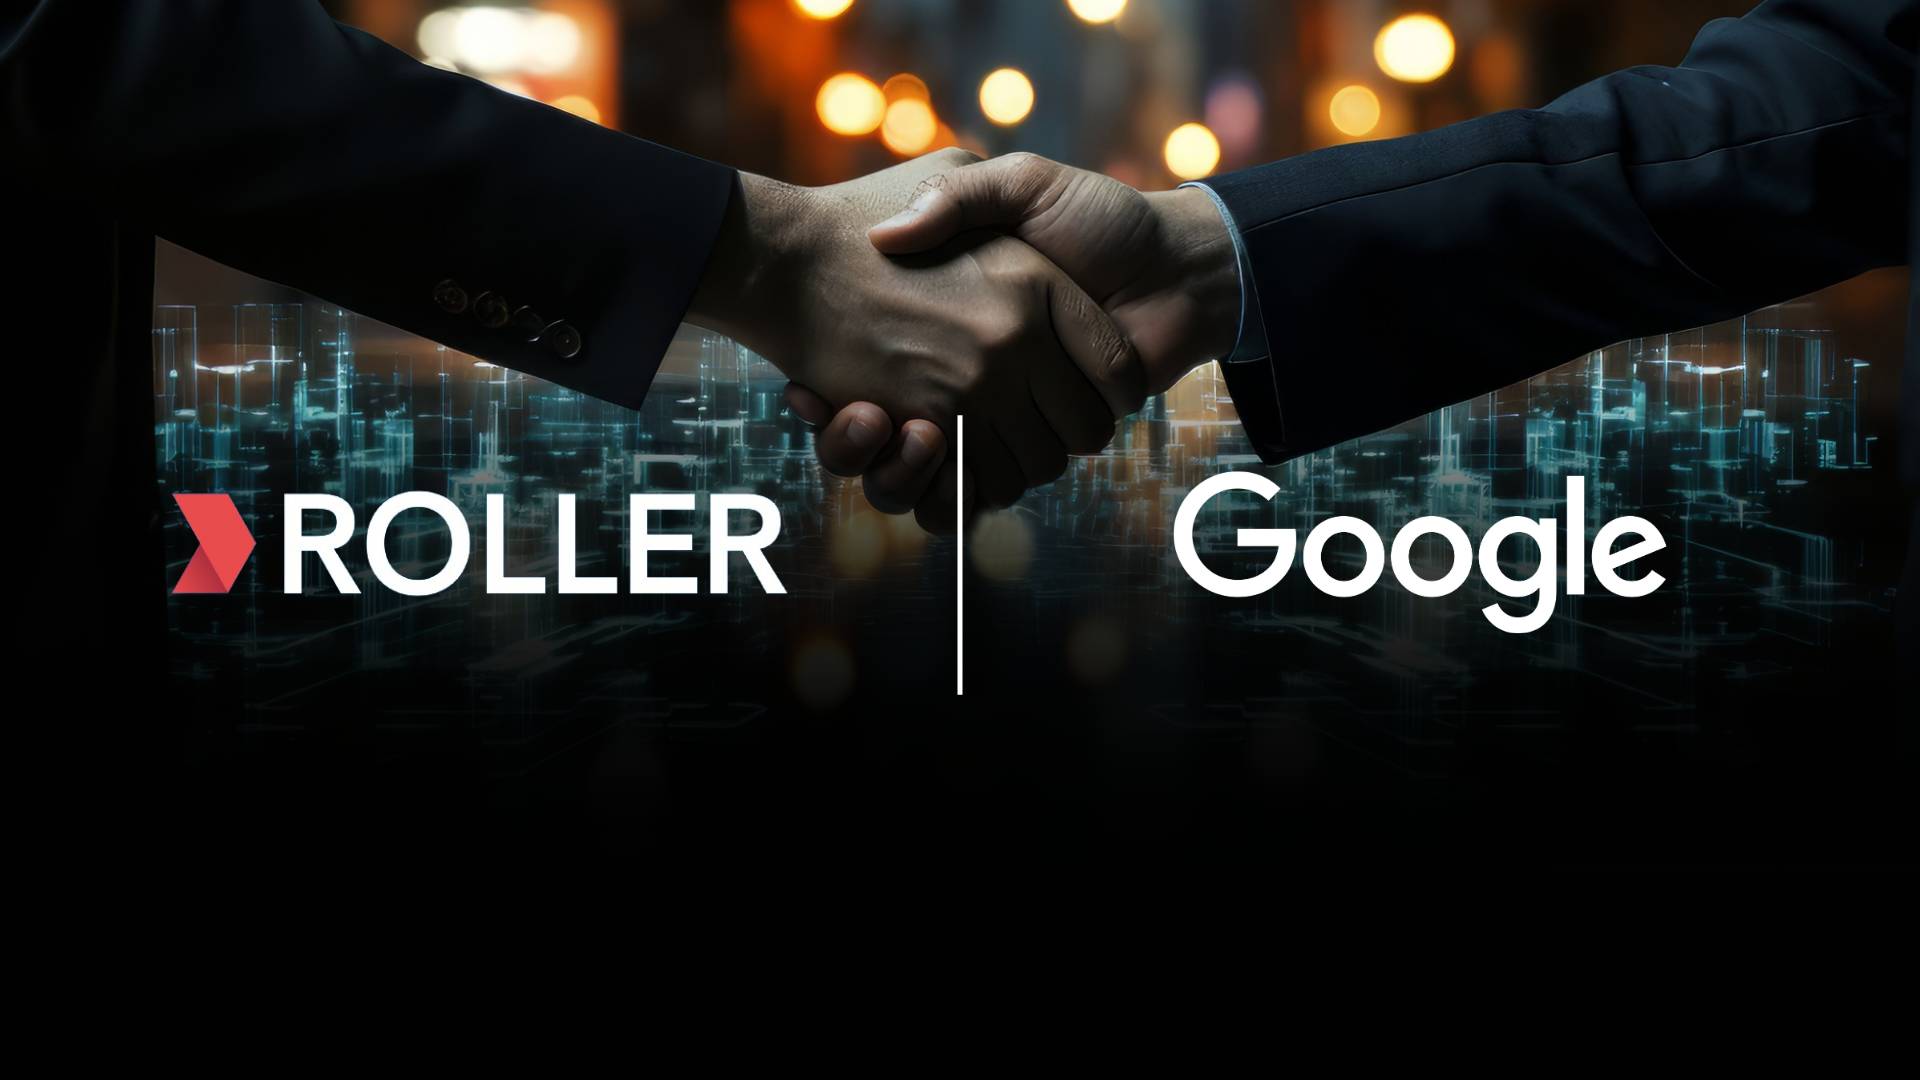 ROLLER Revolutionizes Venue Management with Analytics Partnership